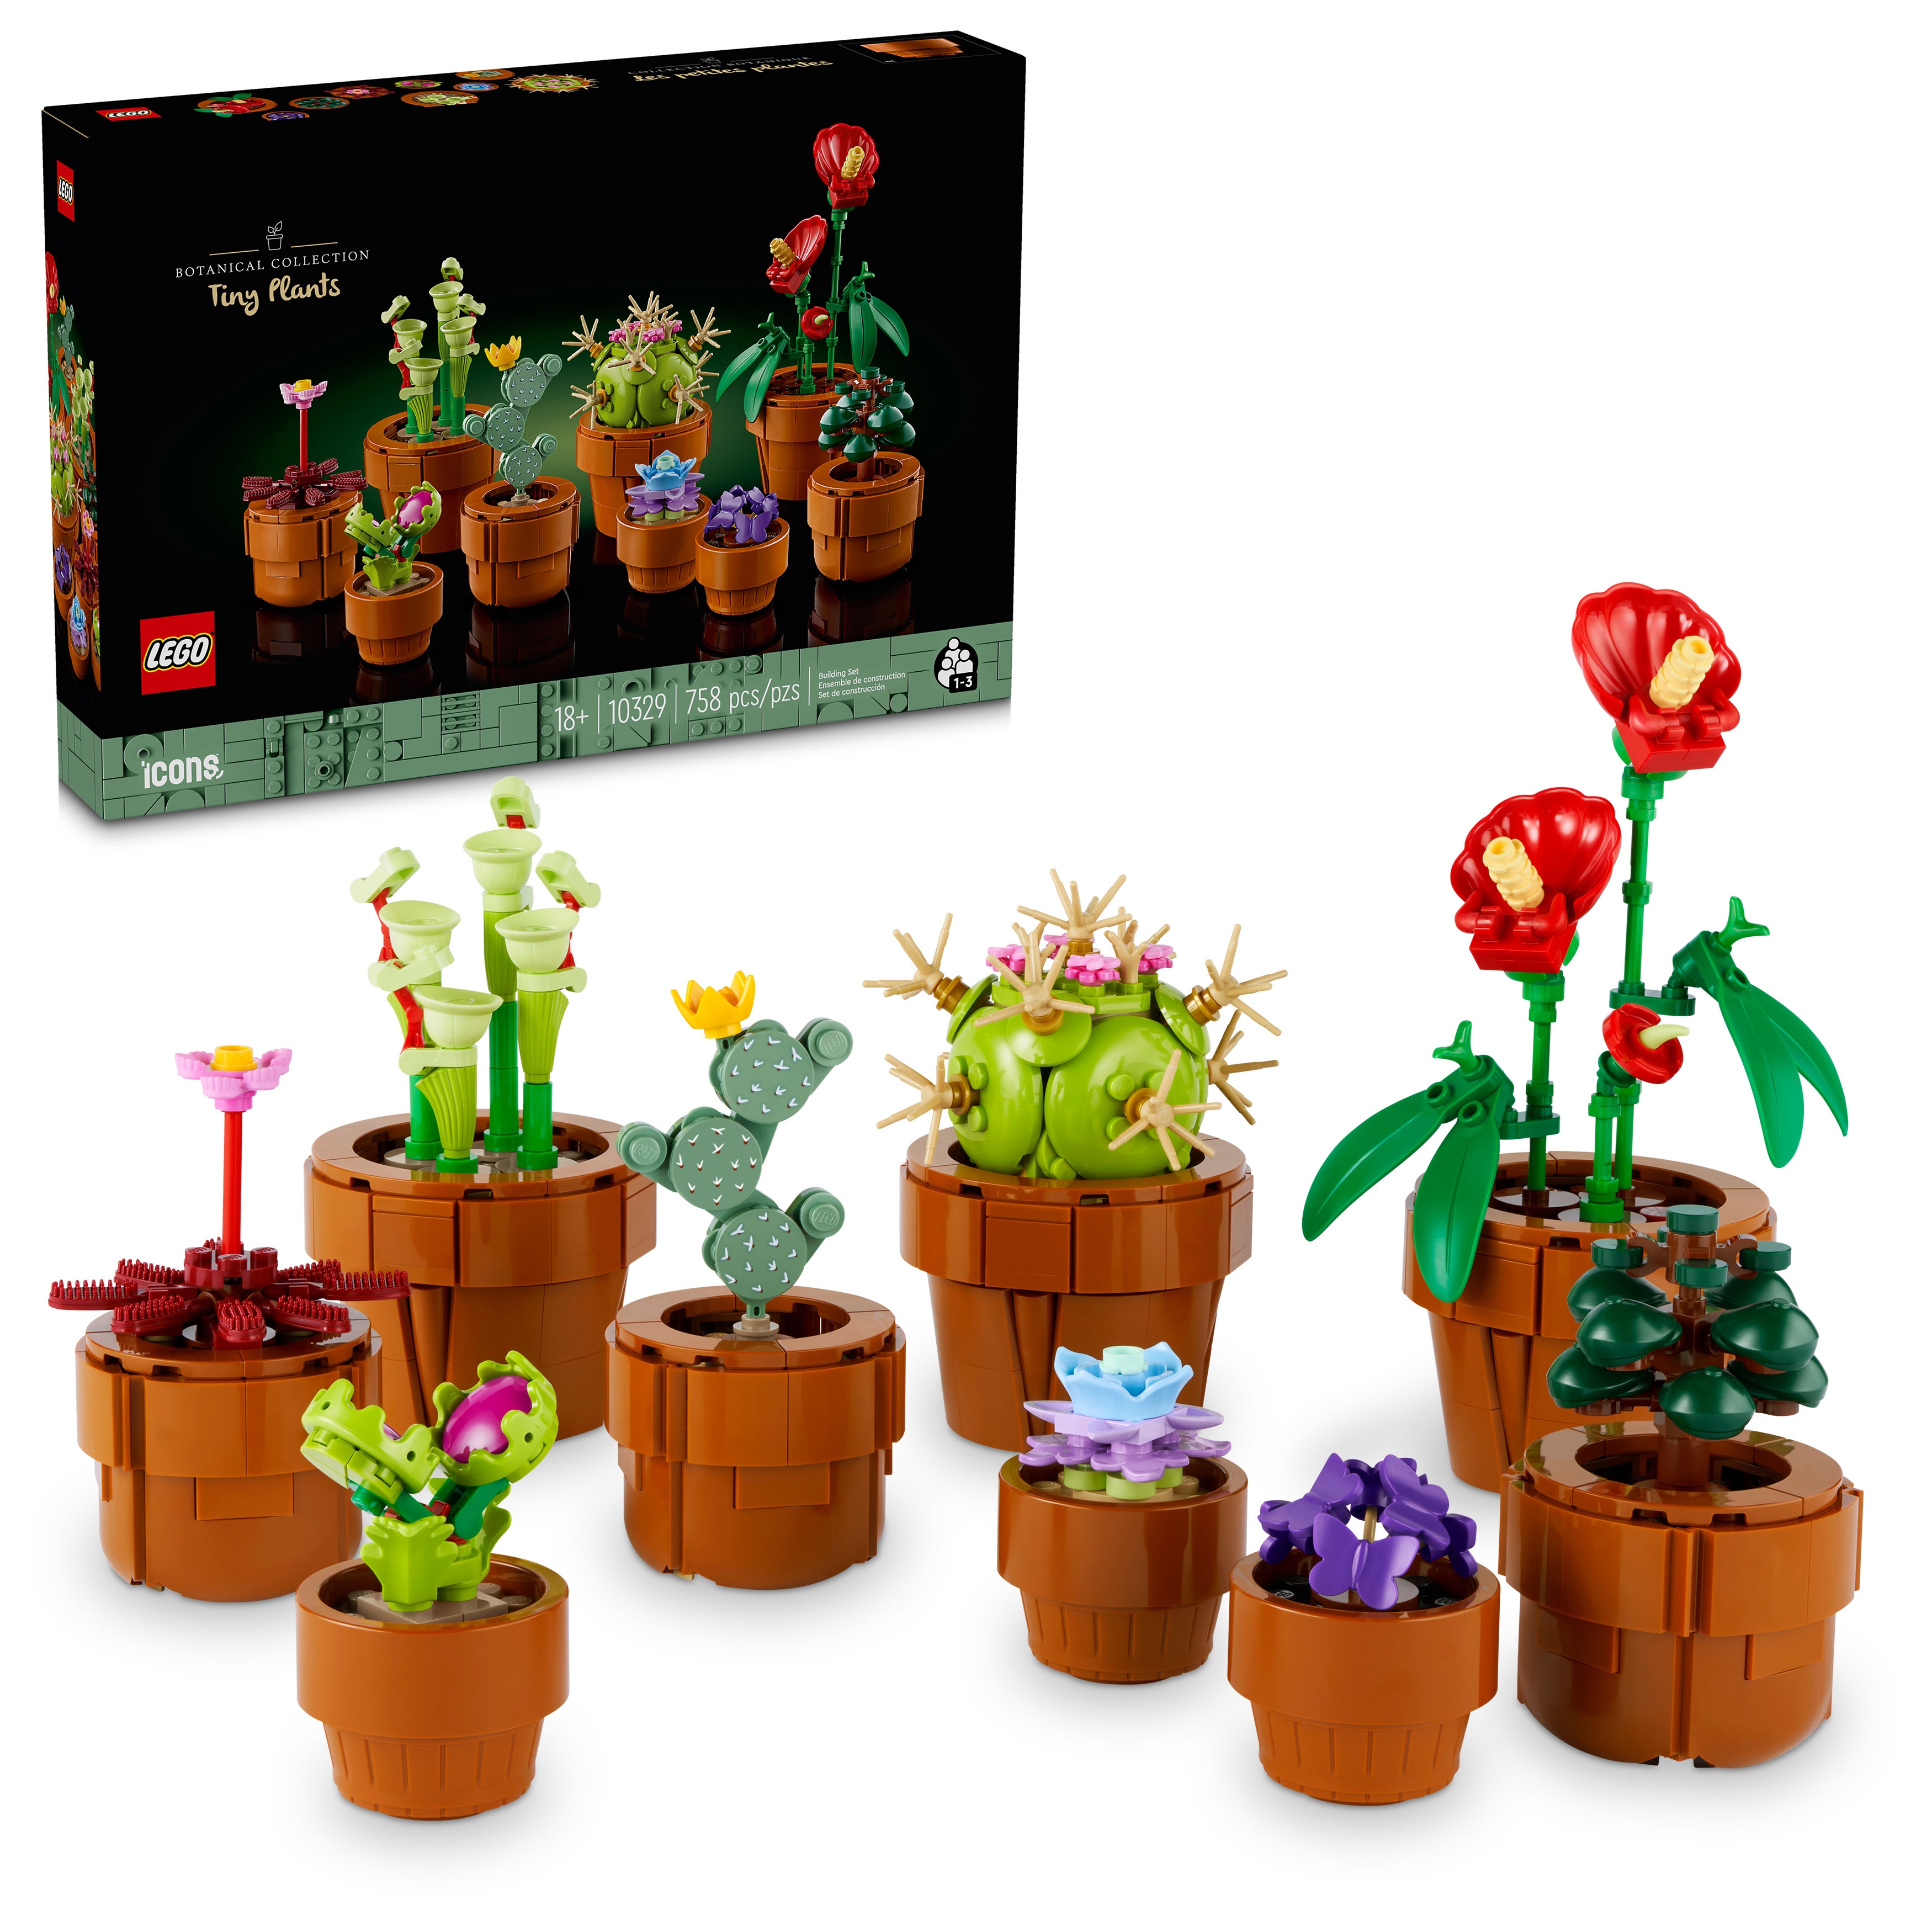 Les petites plantes 10329, LEGO® Icons